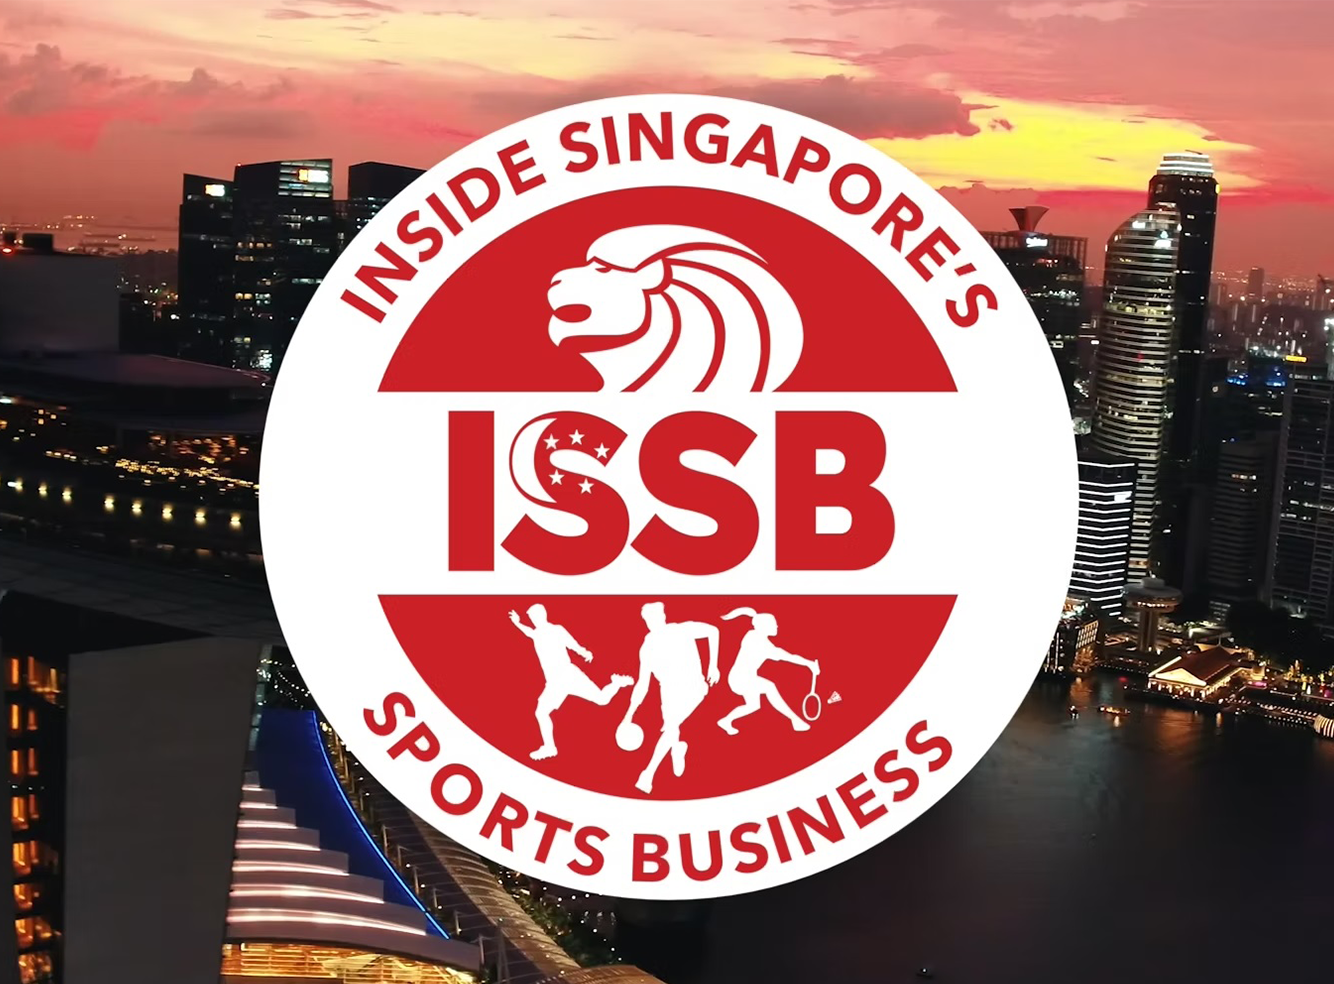  Inside Singapores Sports Business